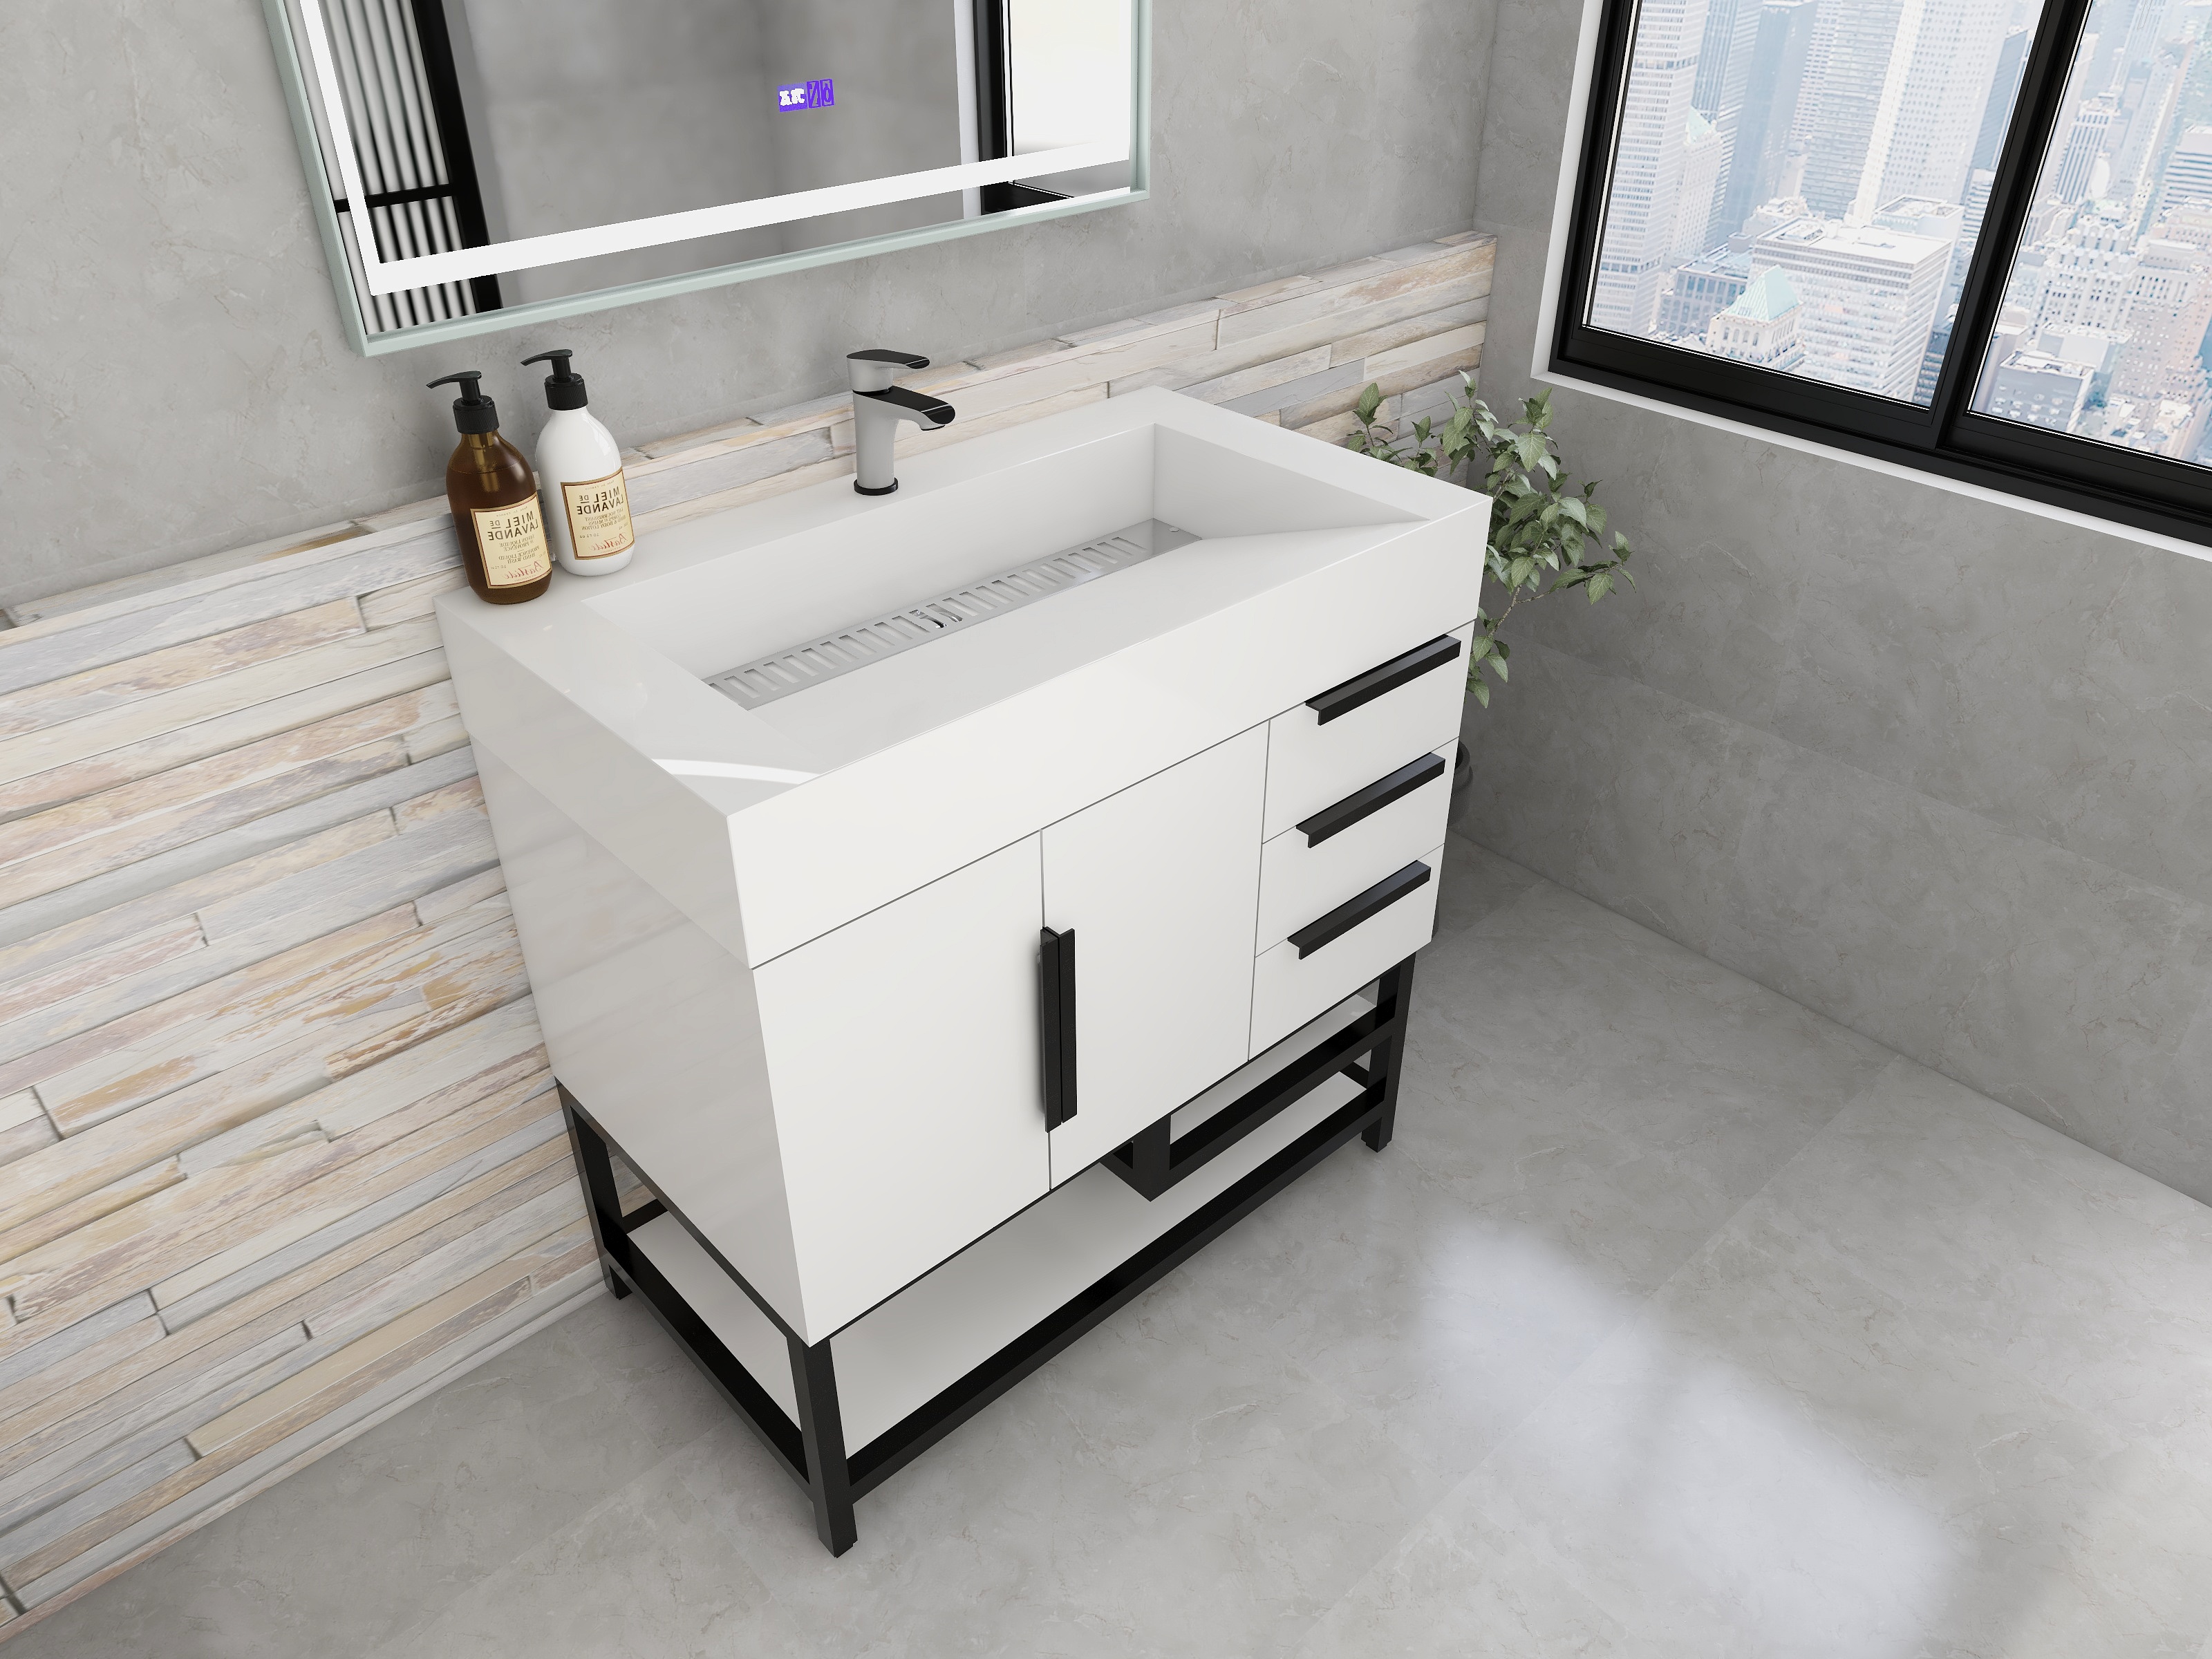 Bethany 36" Freestanding Bathroom Vanity with Reinforced Acrylic Sink in Gloss White with Black Handles | Better Vanity Bath Vanities